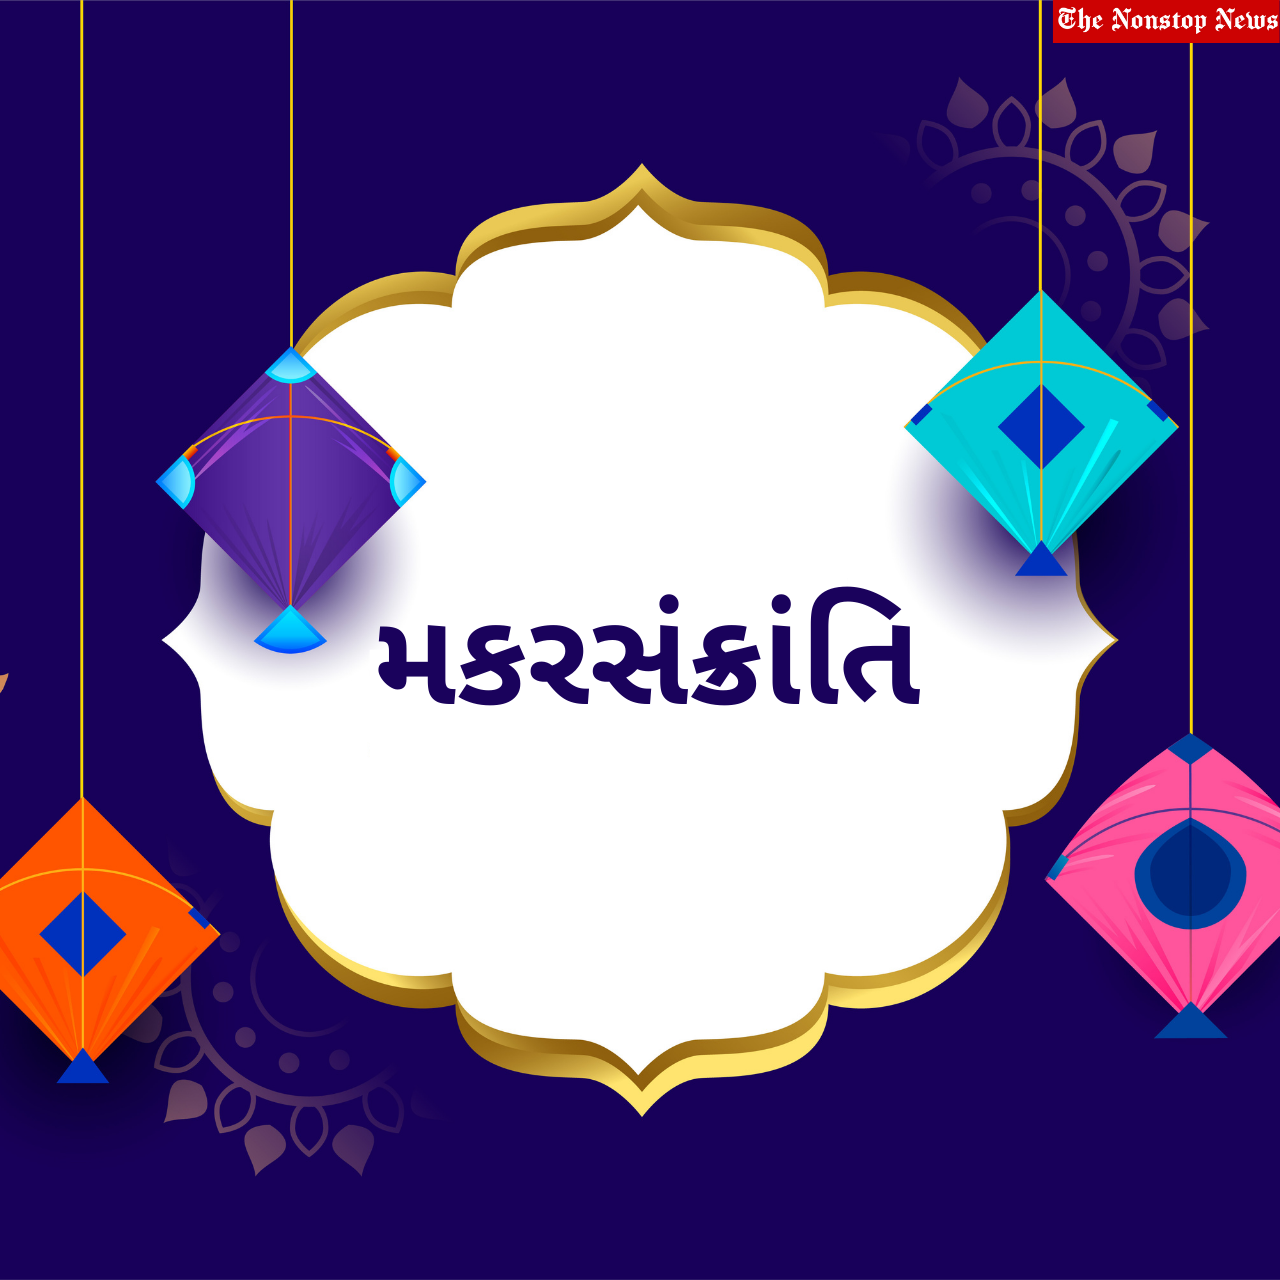 Makar Sankranti 2022: Gujarati Wishes, Quotes, HD Images, Messages, Greetings, Shayari, Status to greet Friends and Family